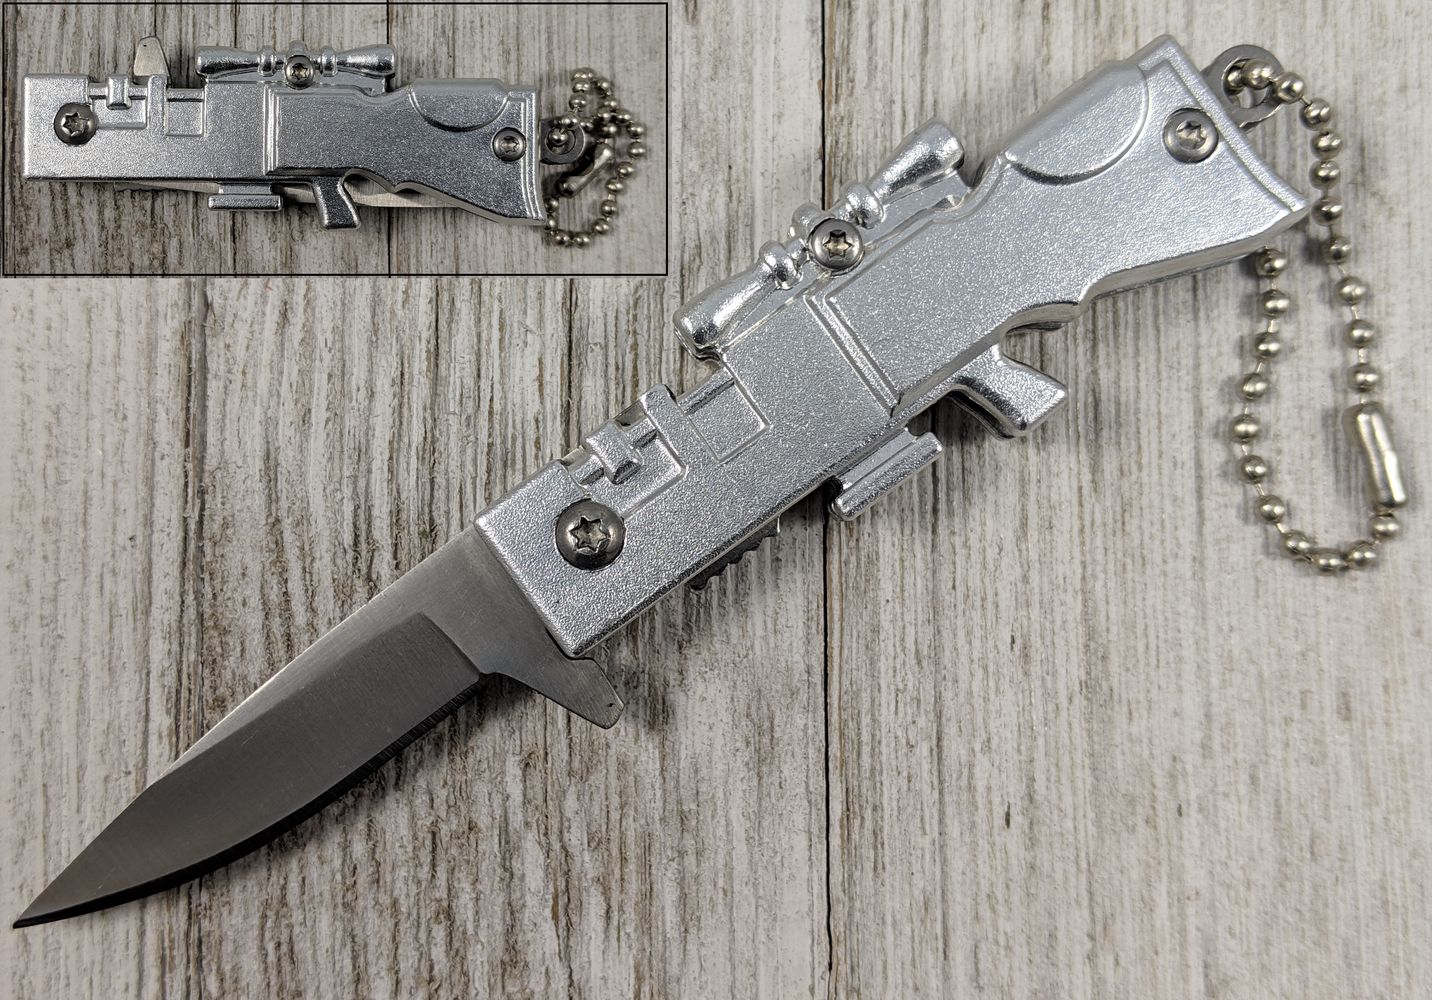 Spring-Assist Folding Keychain Knife | Mini Silver Military Sniper Rifle 3